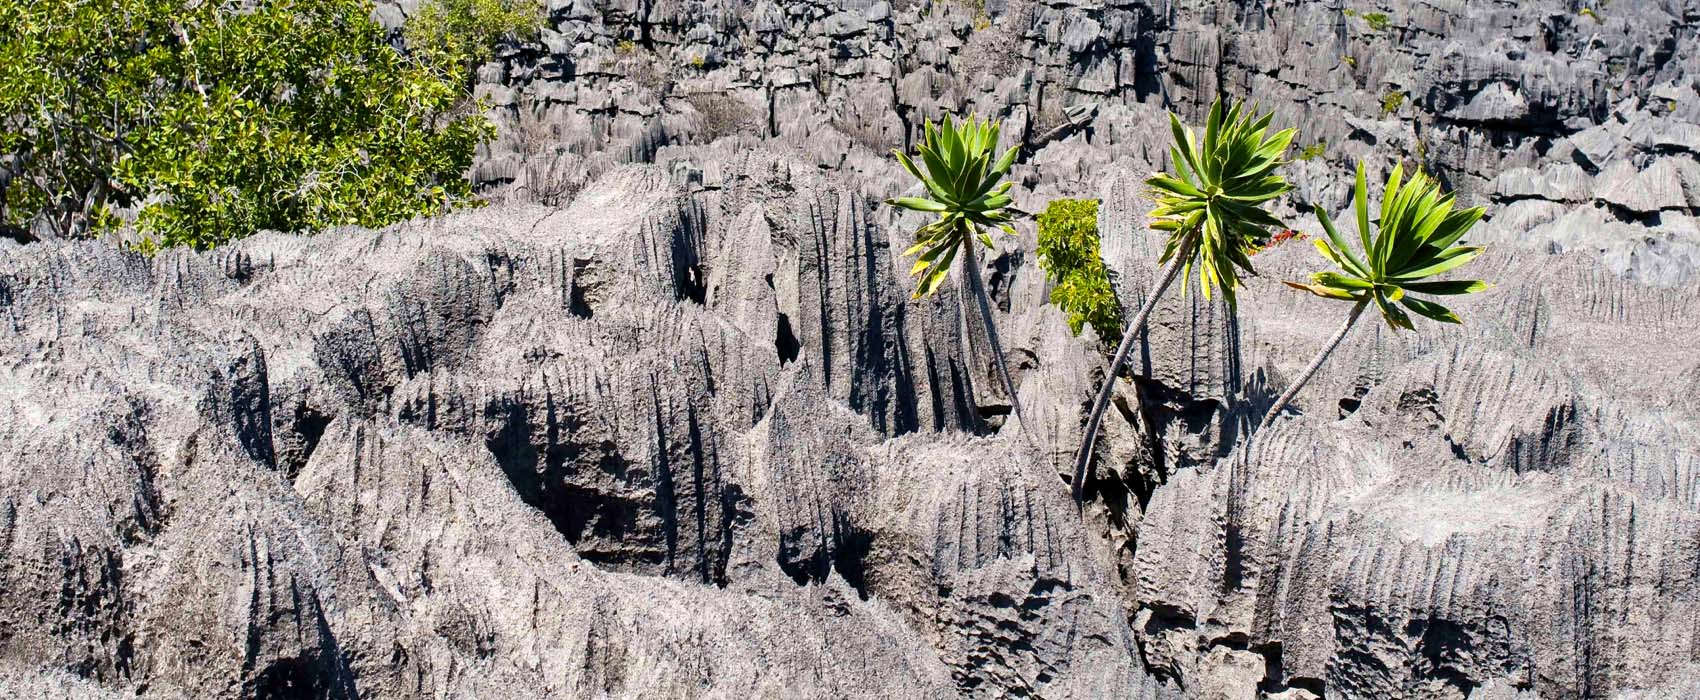 African Madagascar Safari rock formations